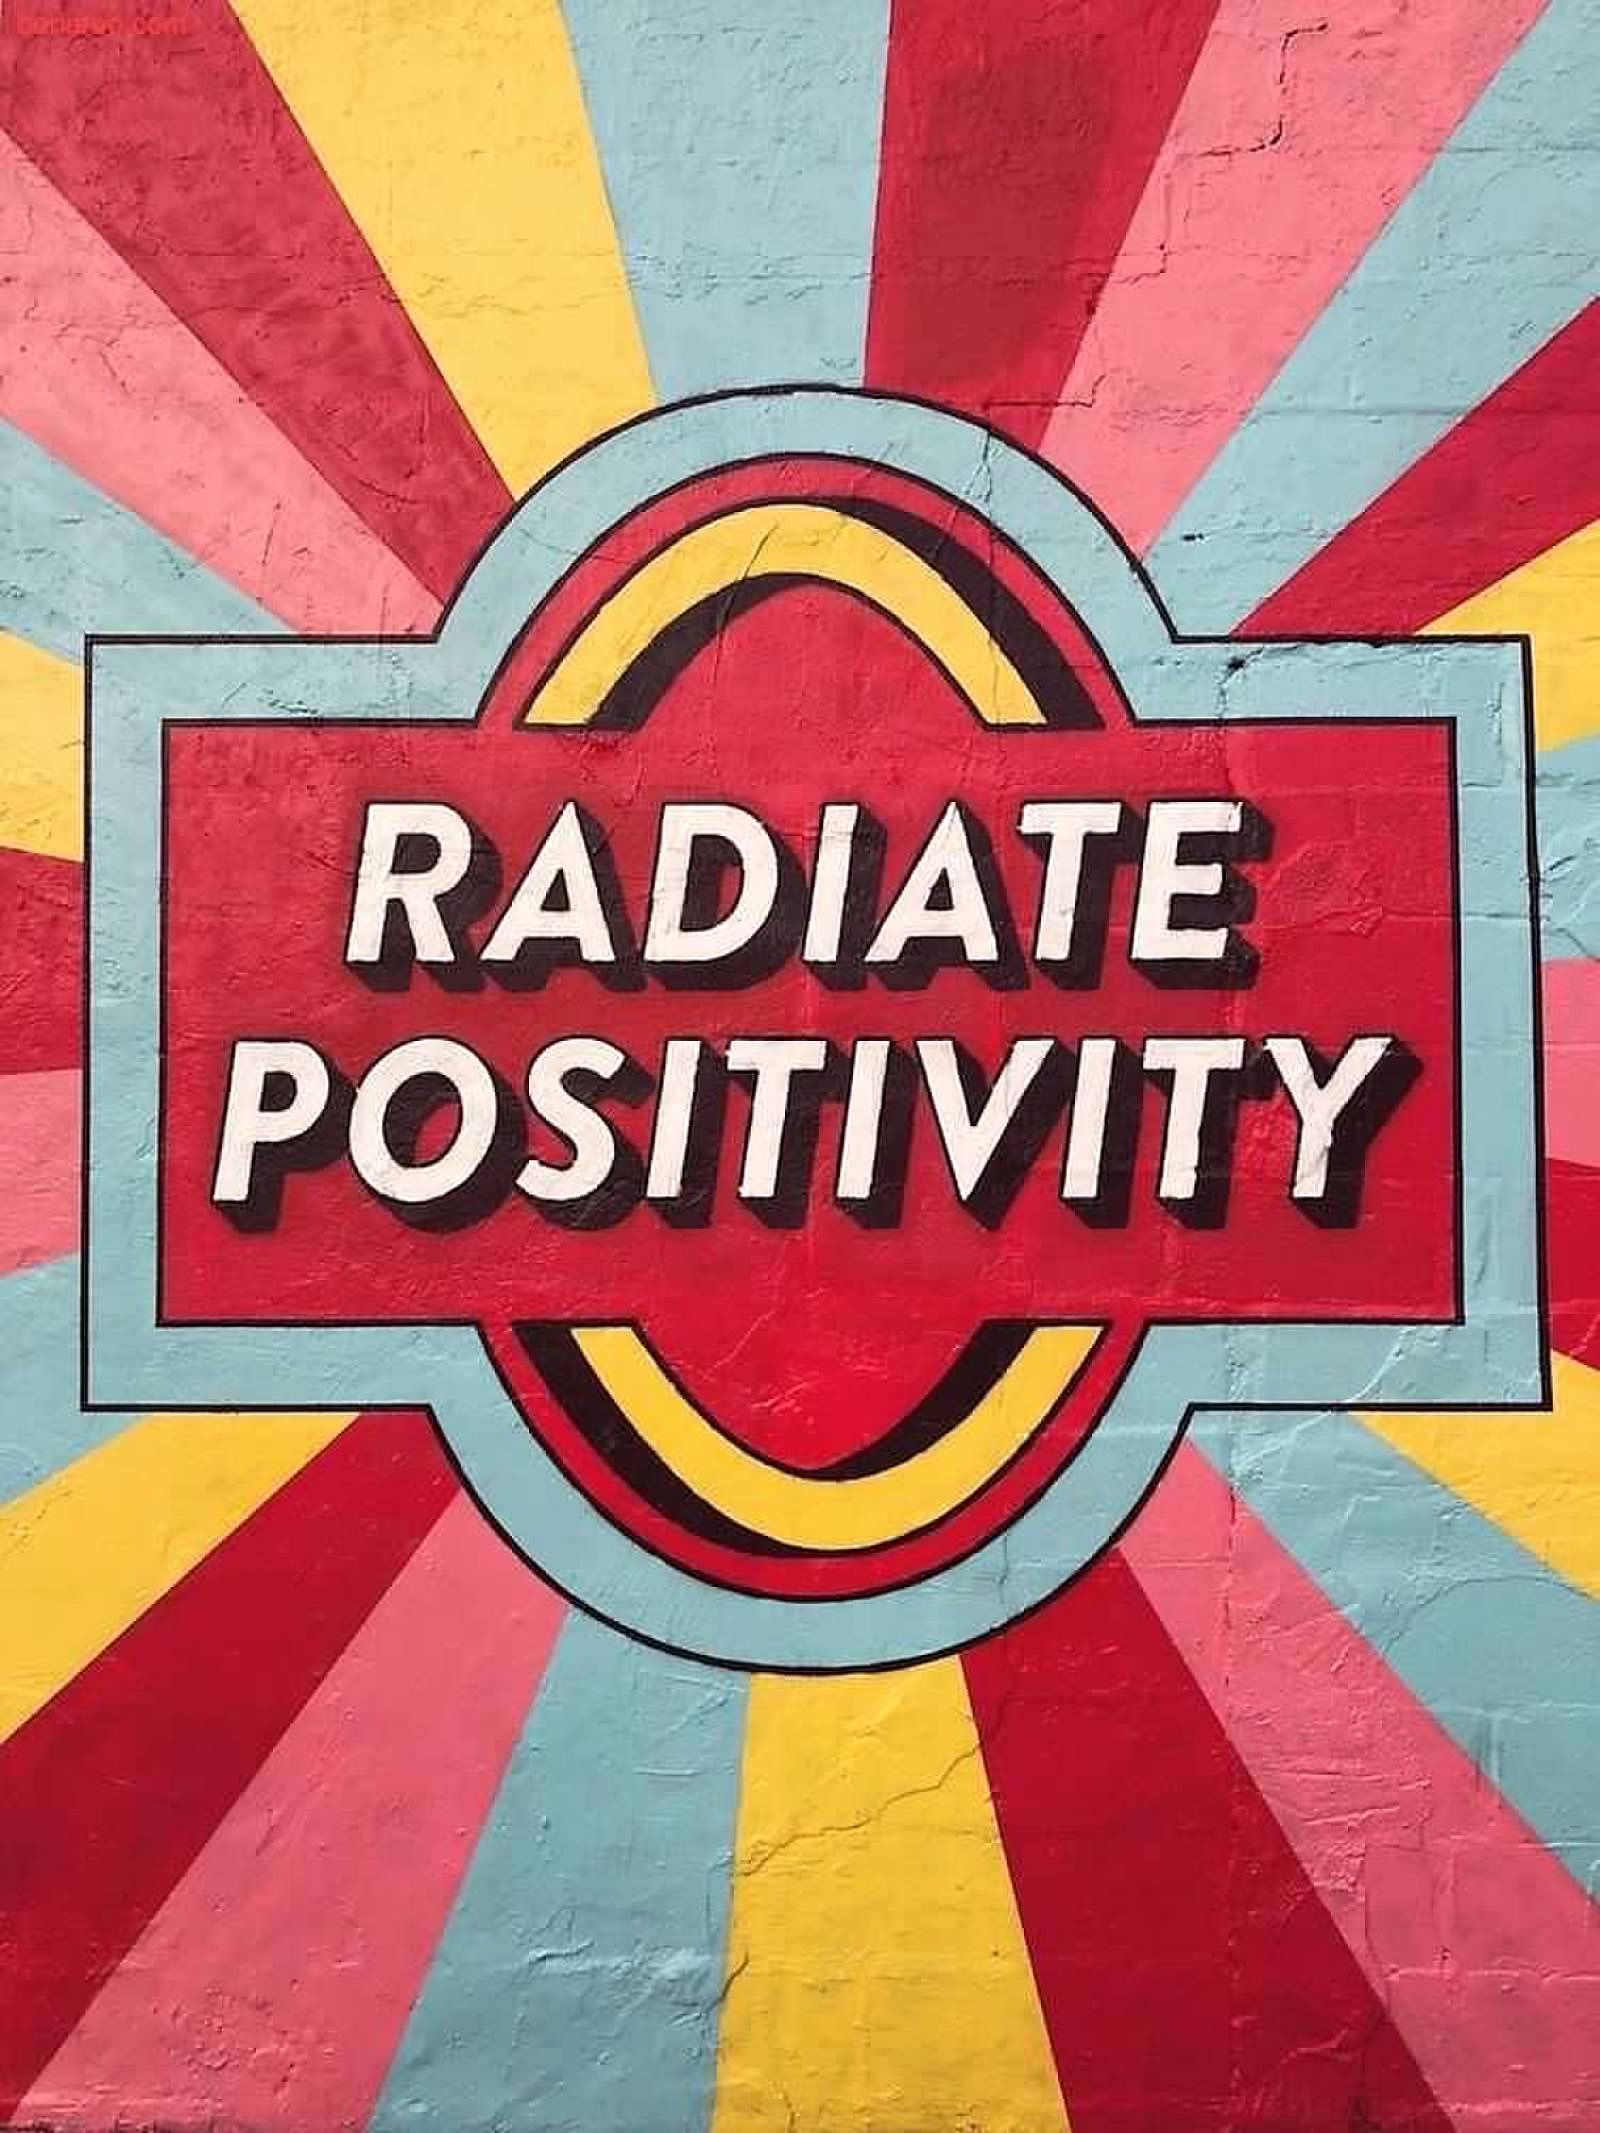 Radiate Positivity Wallpaper